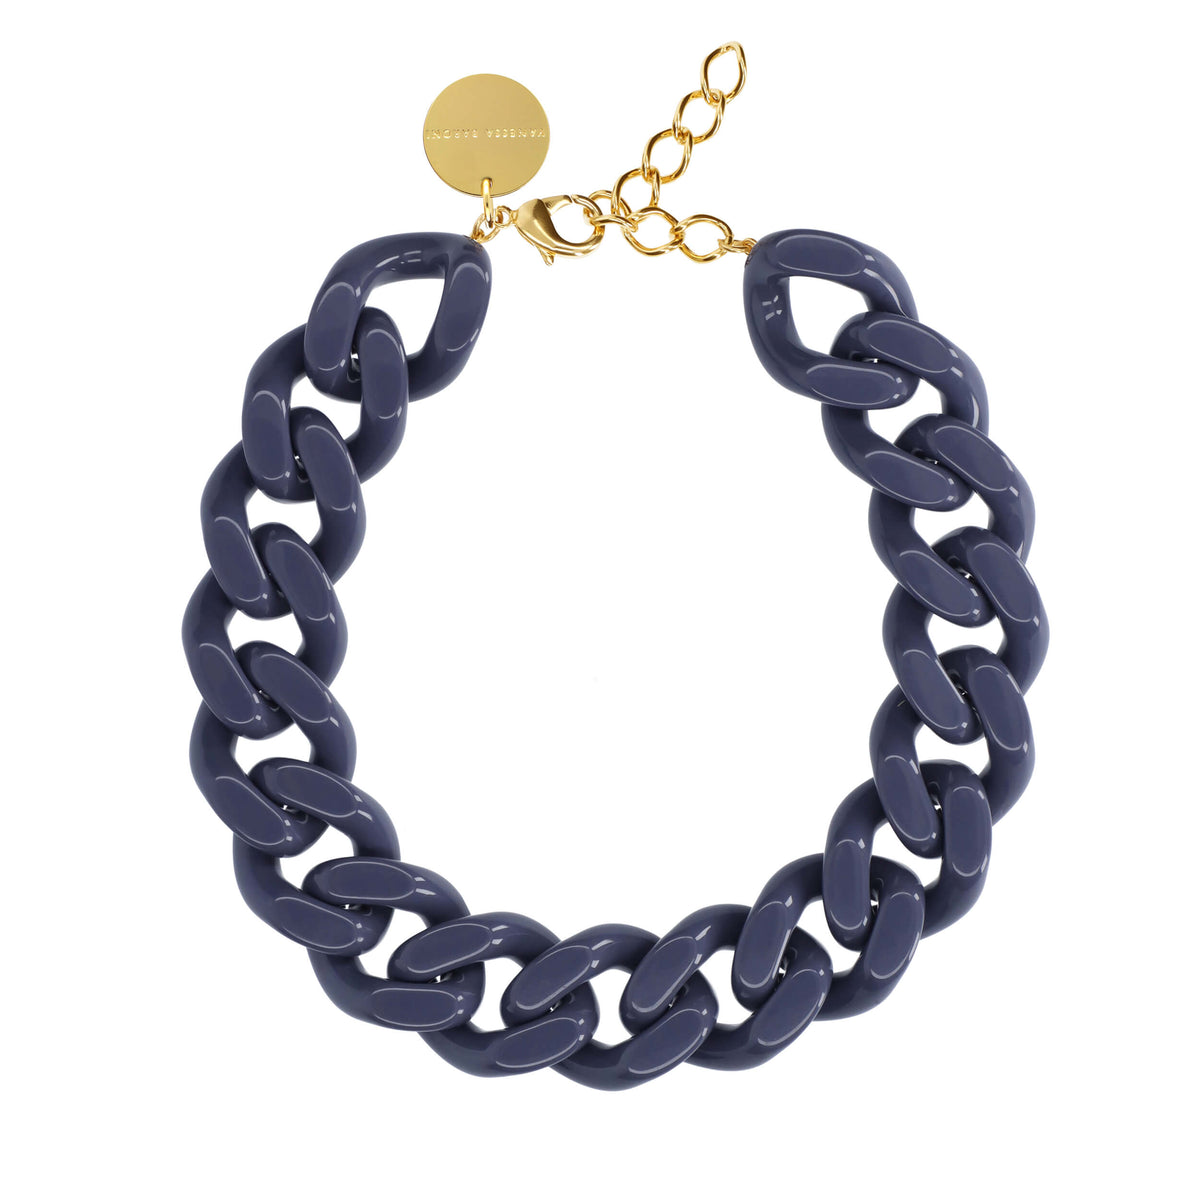 BIG Flat Chain Necklace grey-blue